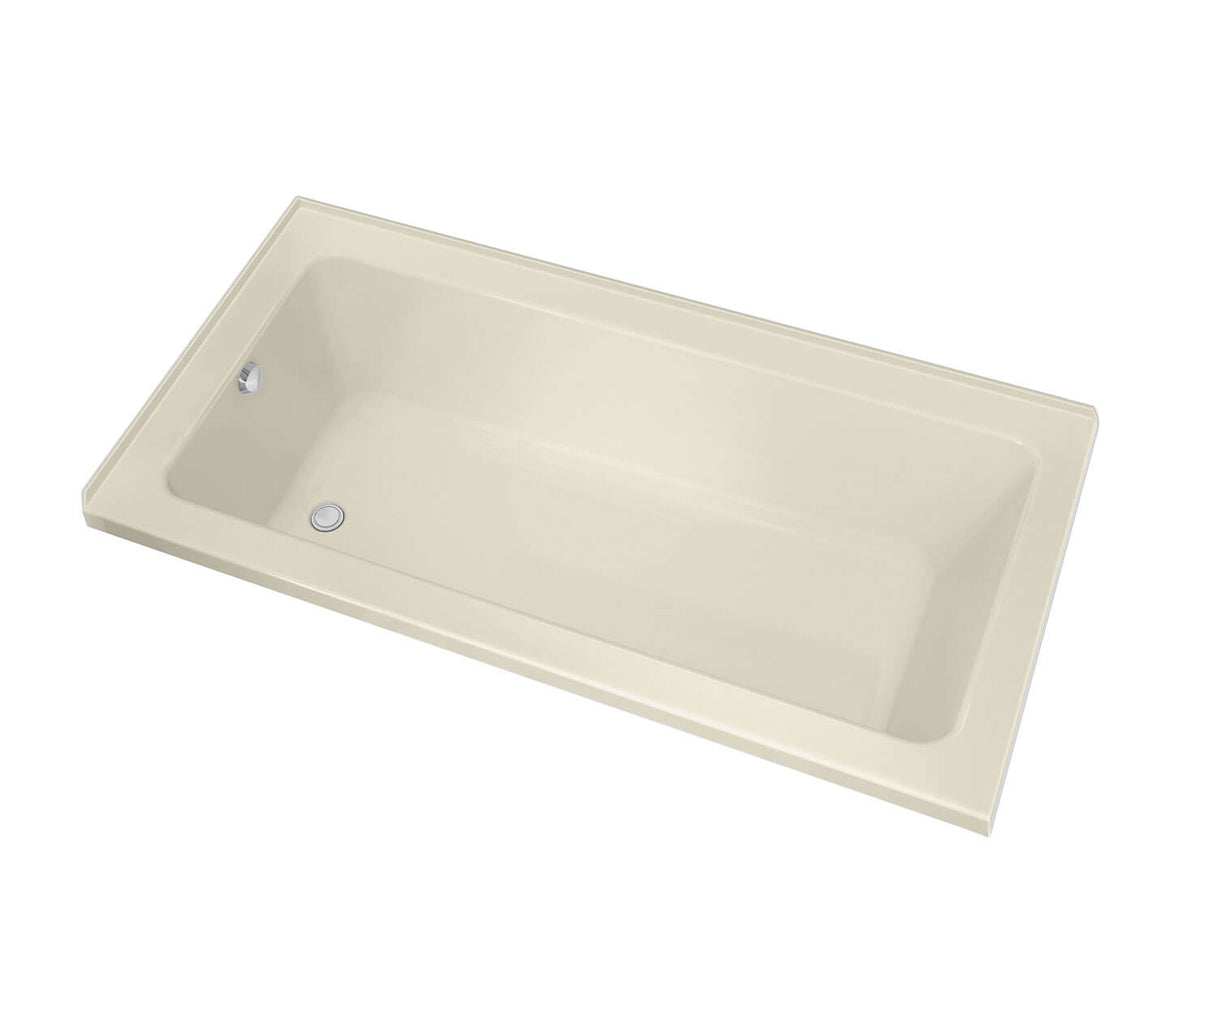 MAAX 106208-R-003-004 Pose 6636 IF Acrylic Corner Left Right-Hand Drain Whirlpool Bathtub in Bone